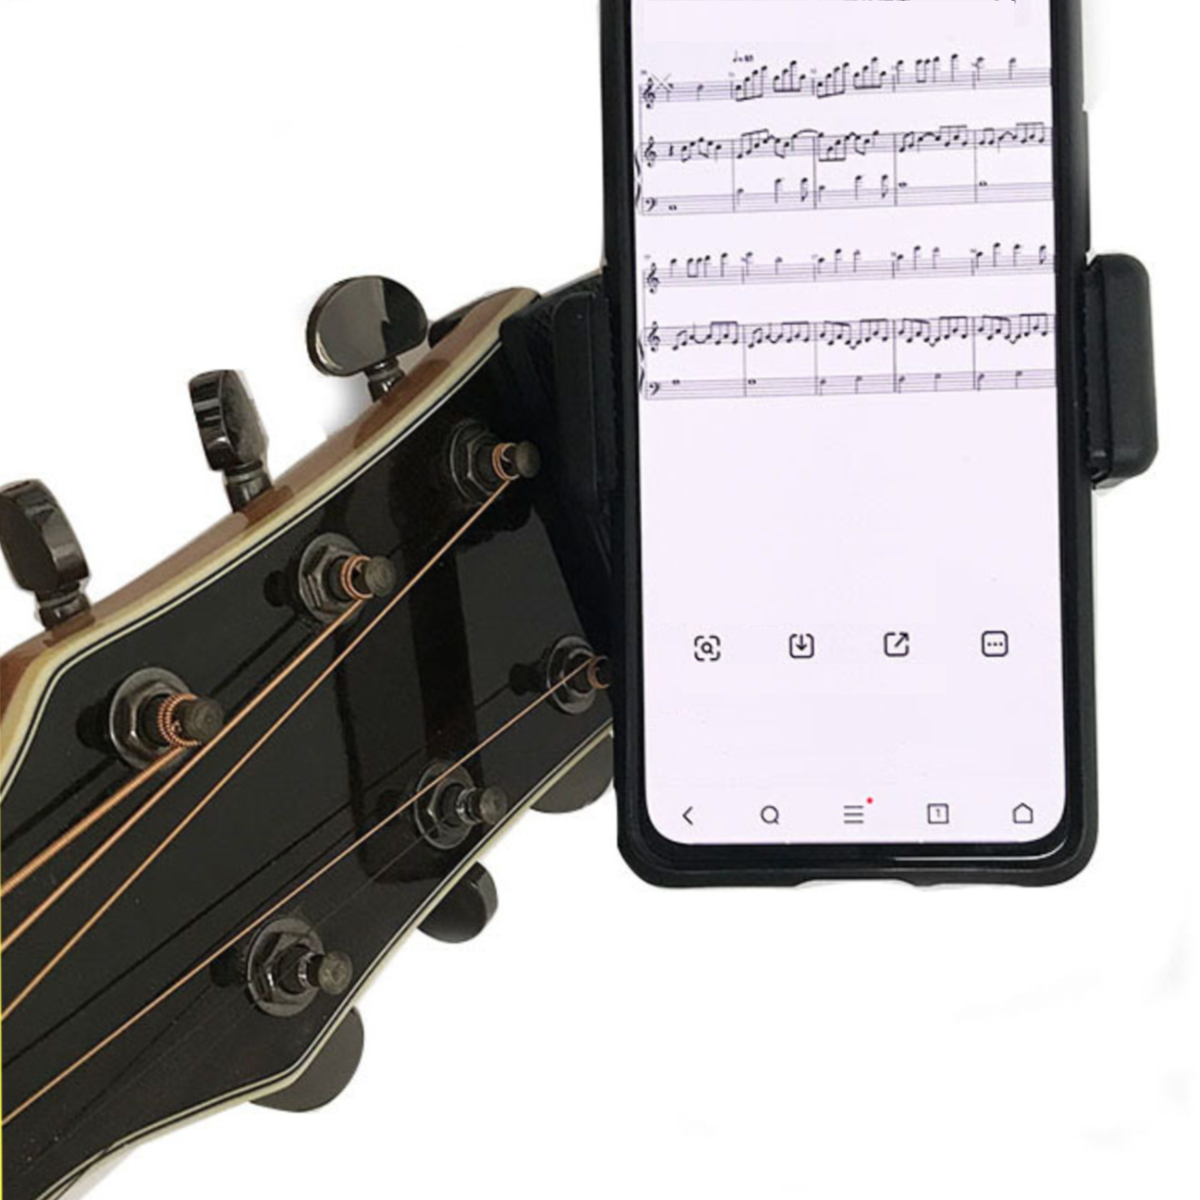 KA-LINE STAND US-ZA18 - Uchwyt na gitarę do smartfonu